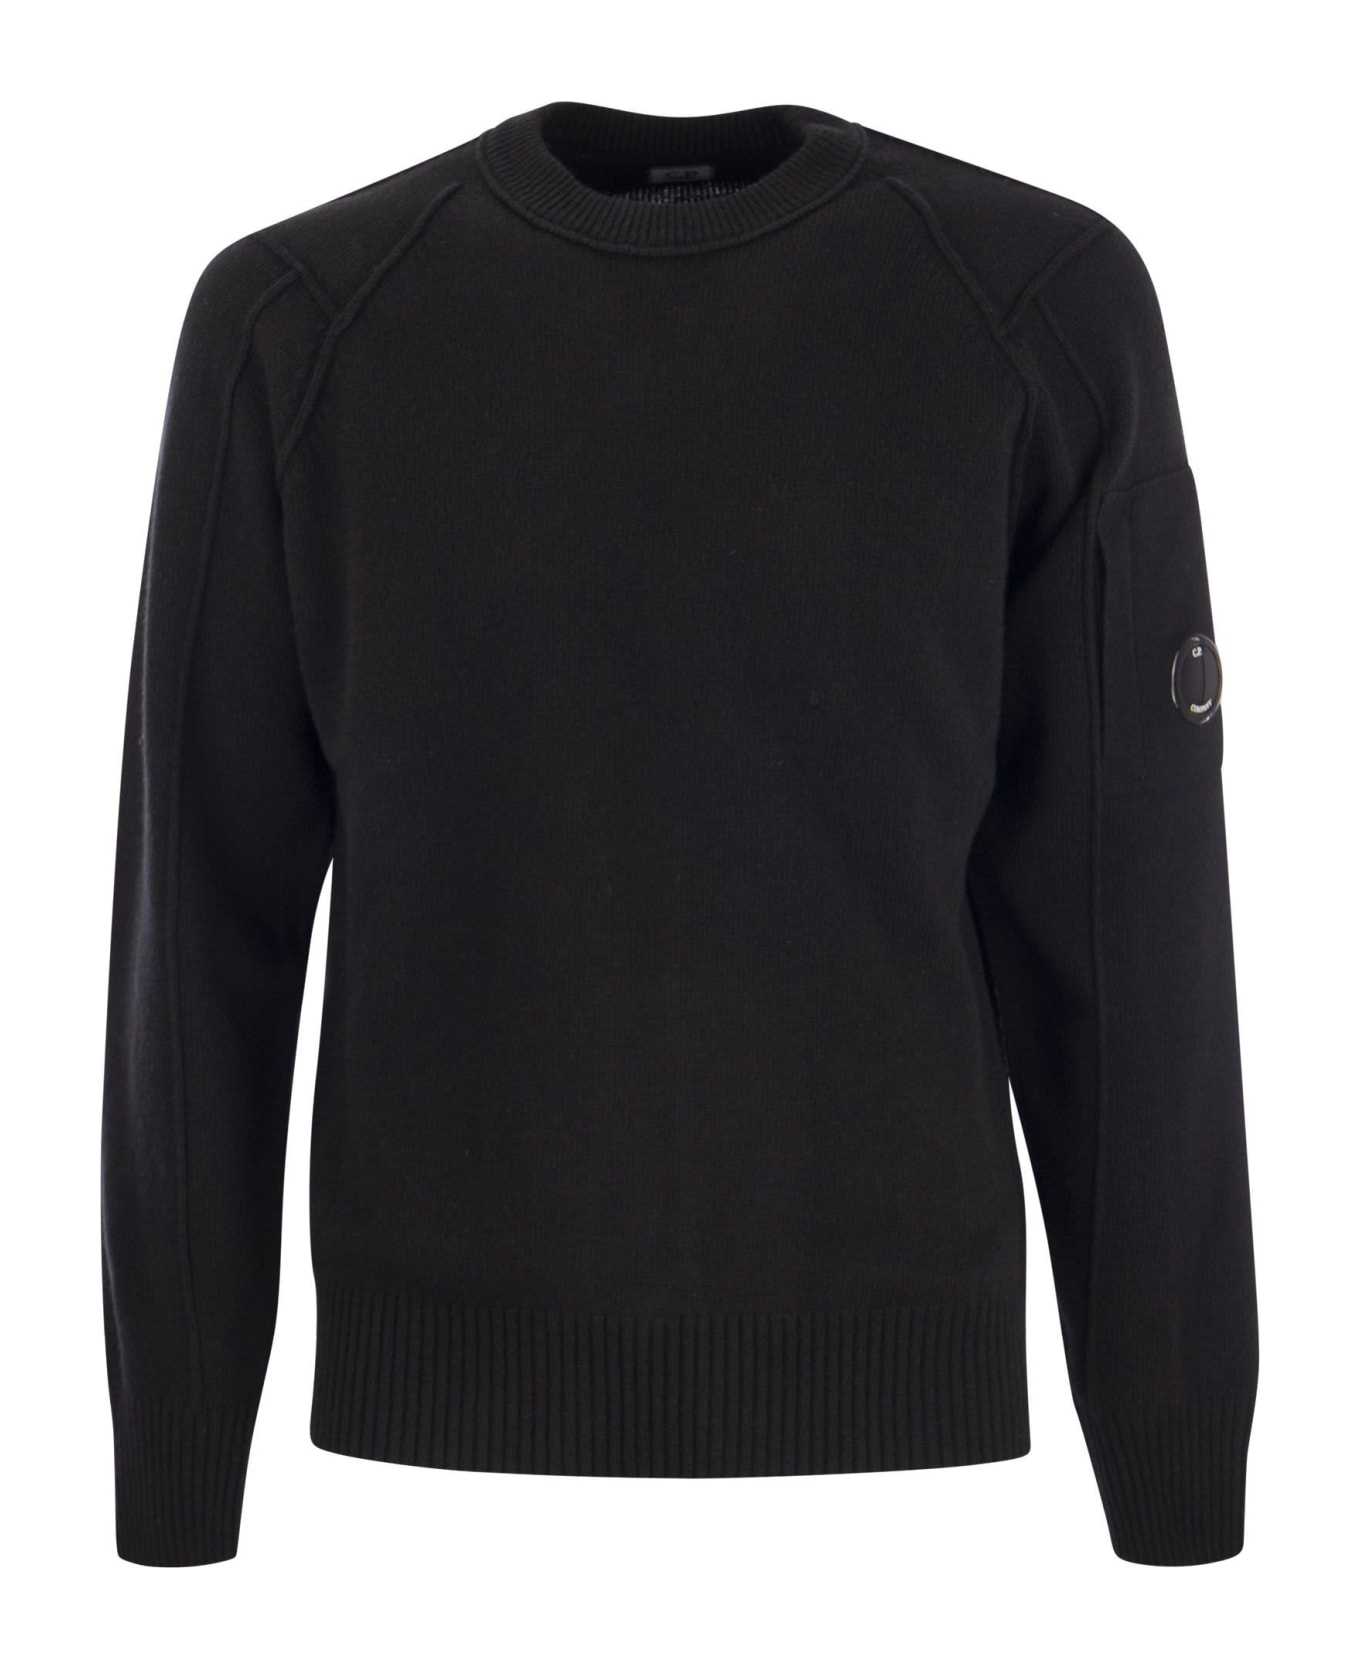 C.P. Company Lambswool Sweater - Black